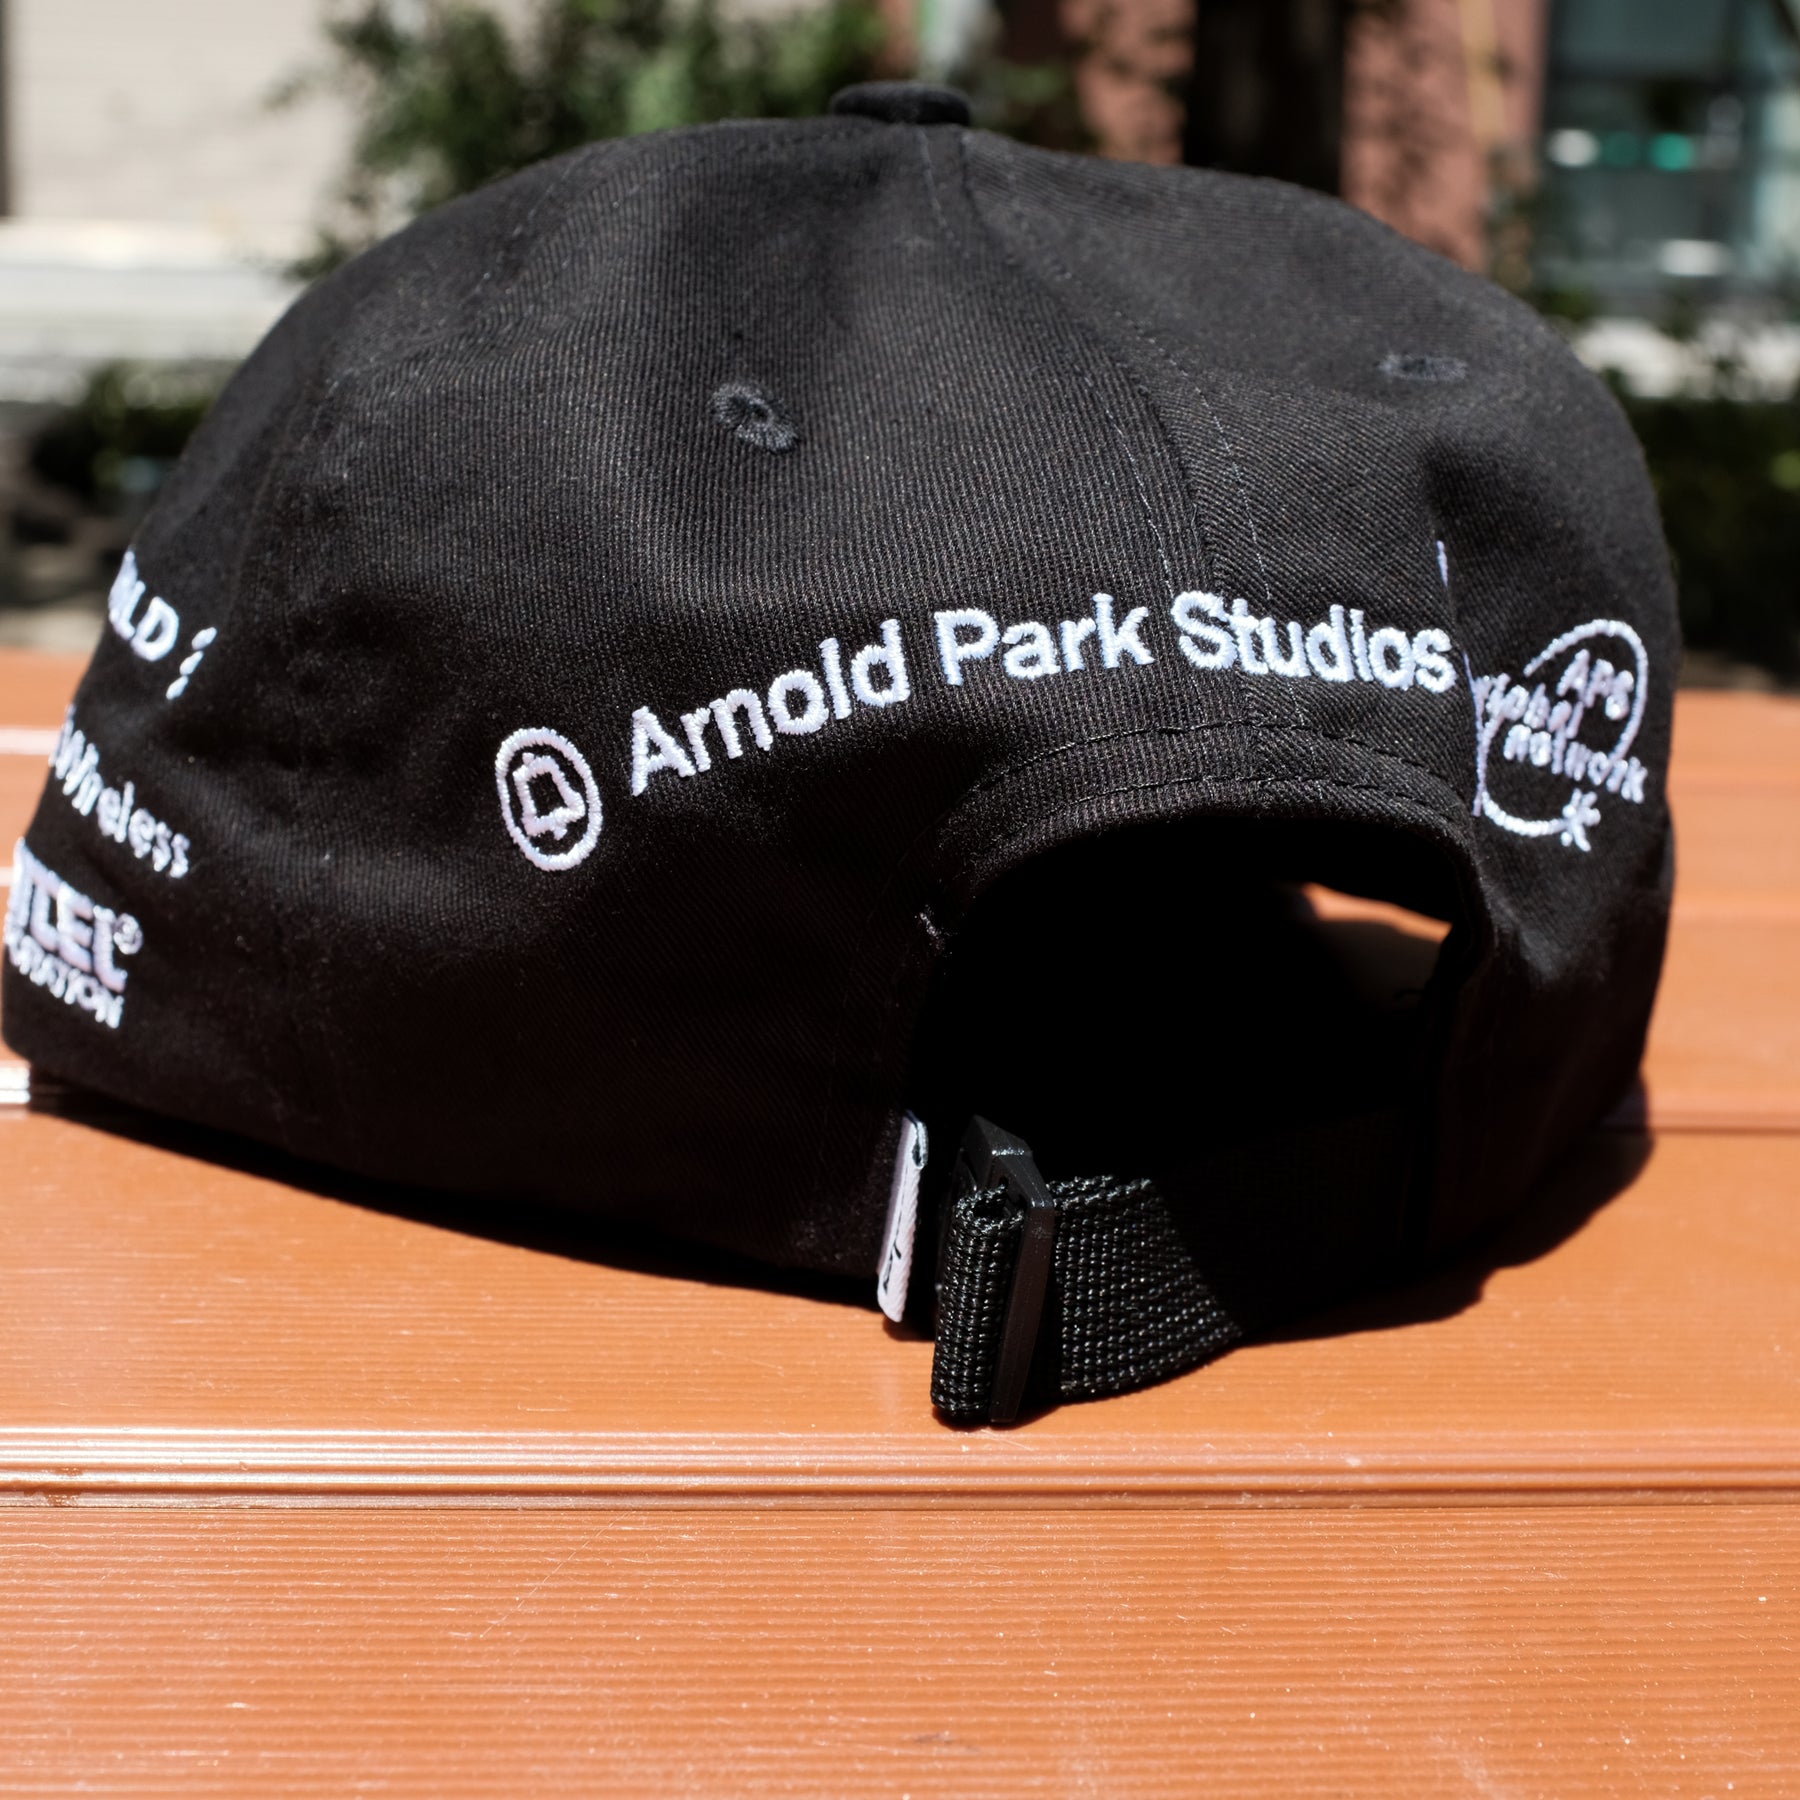 arnold park studios